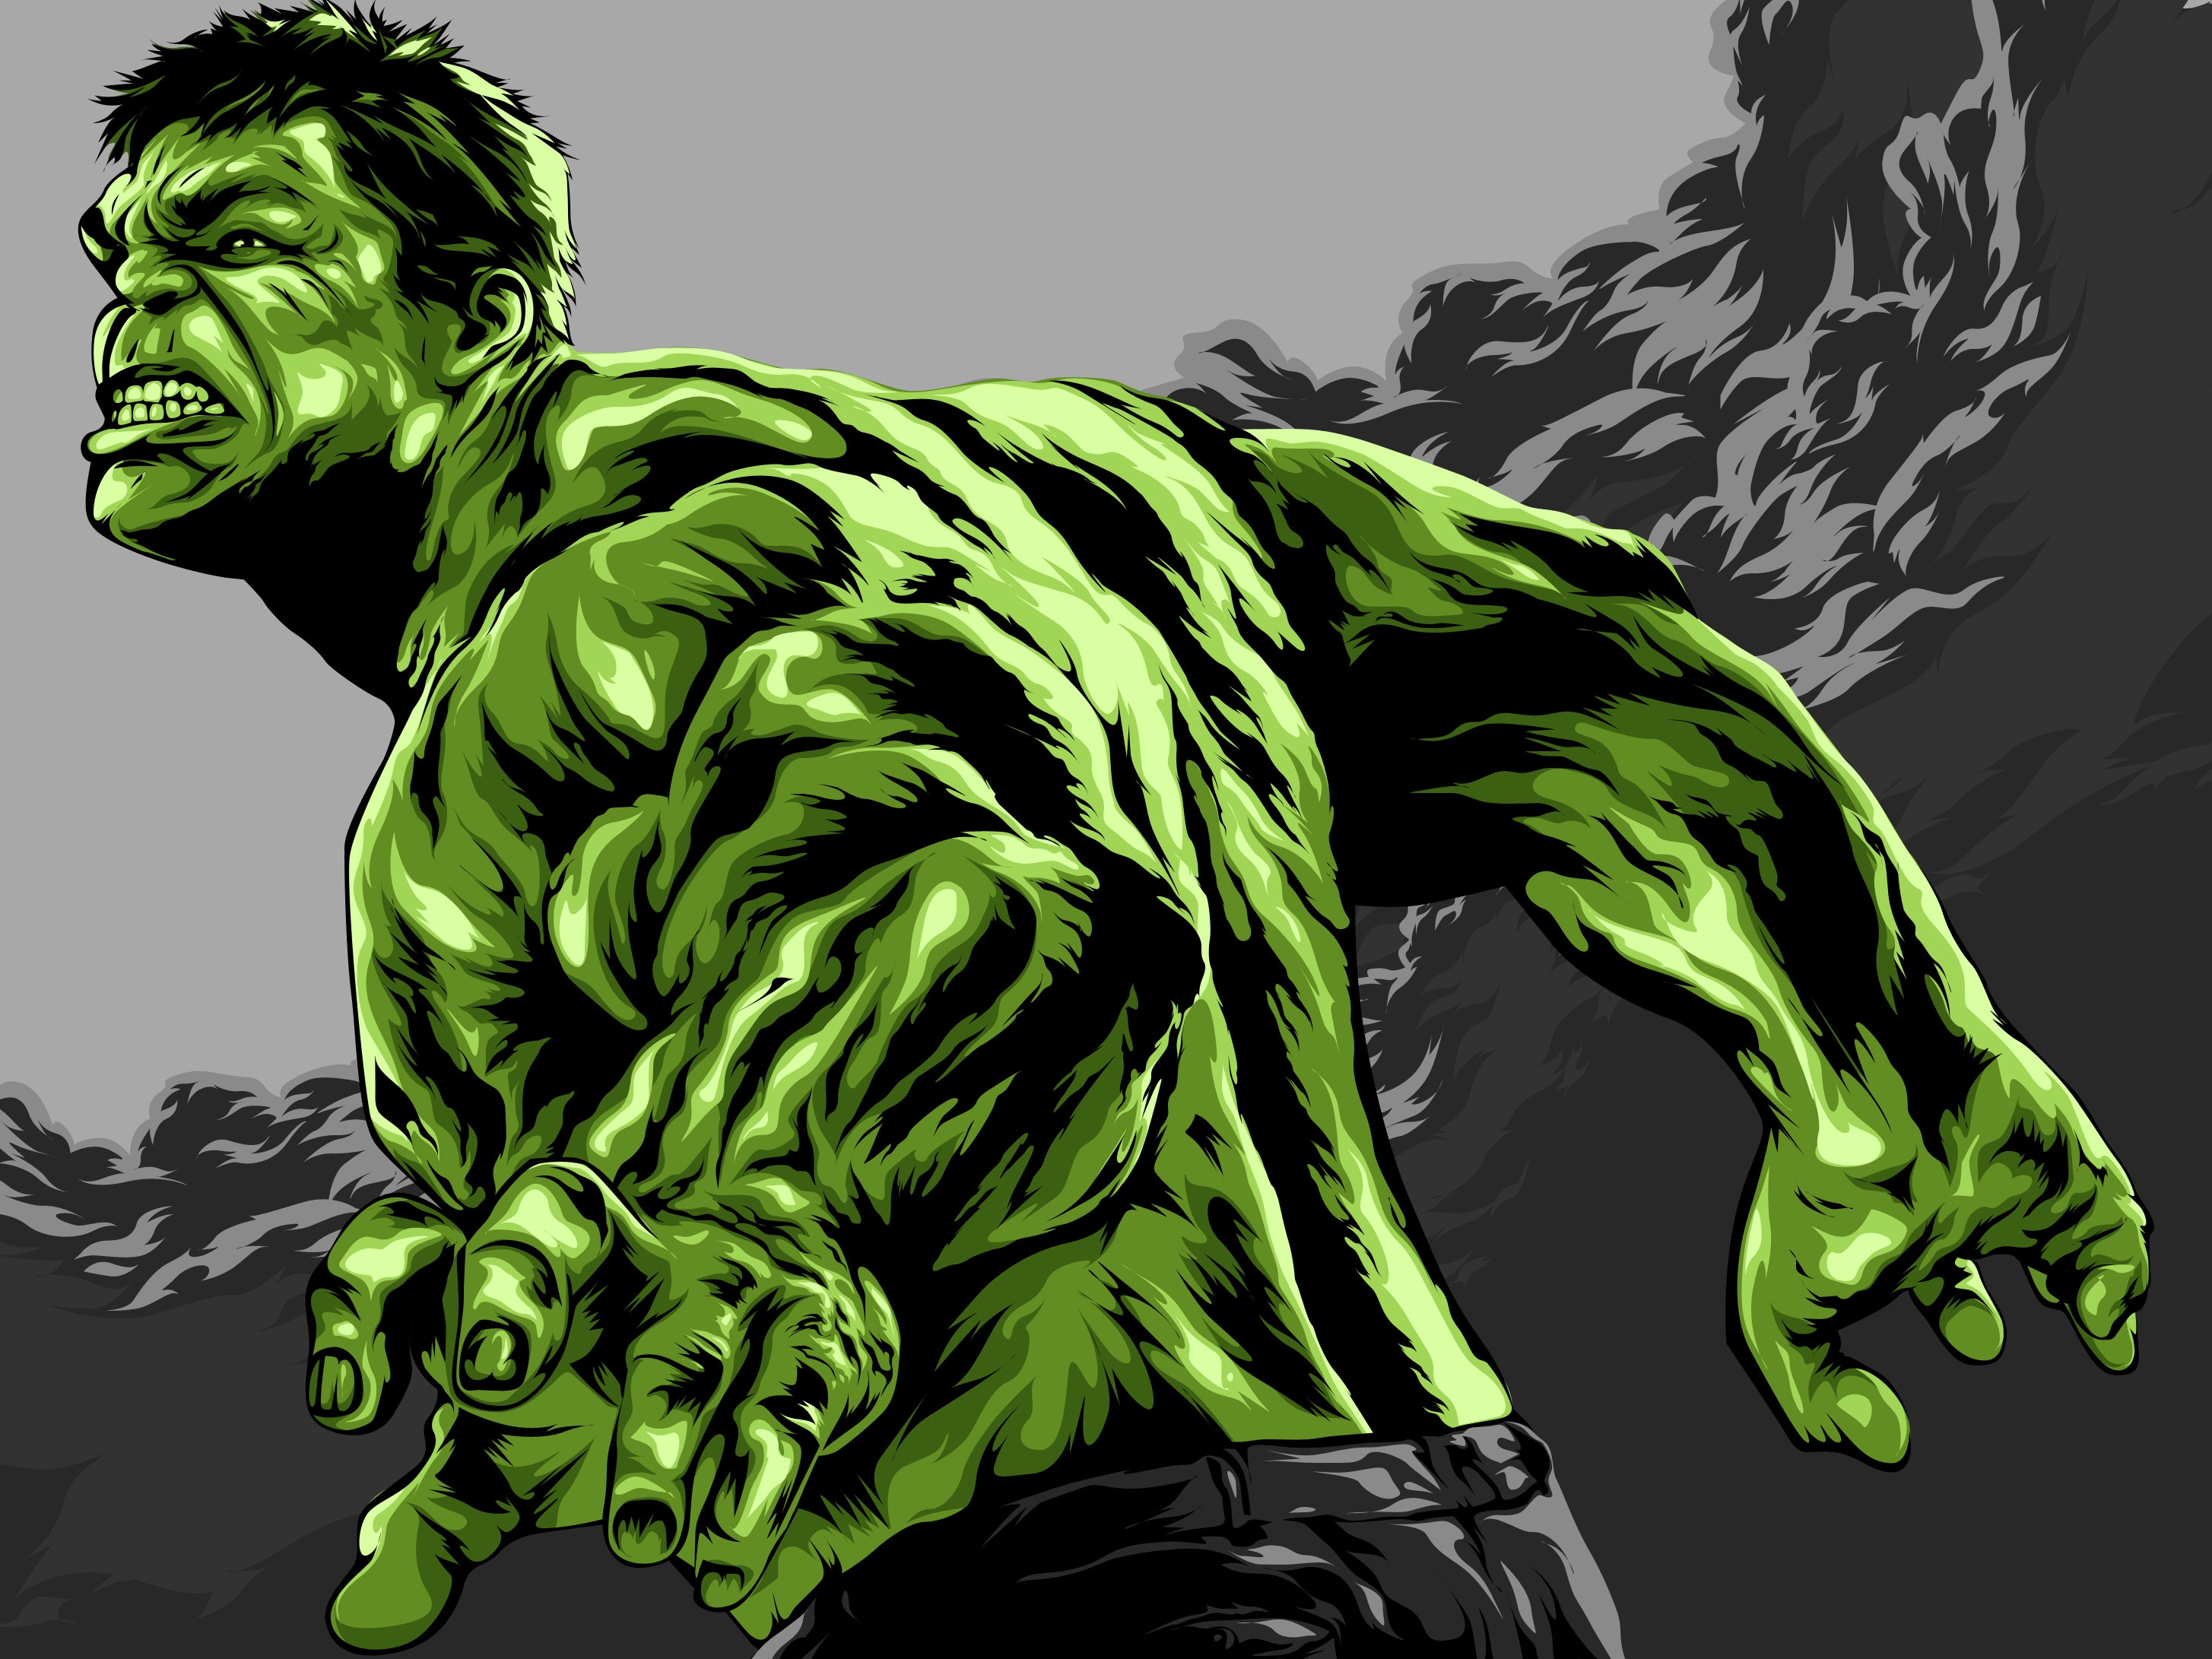 hulk fonds d'écran hd,ponton,personnage fictif,super héros